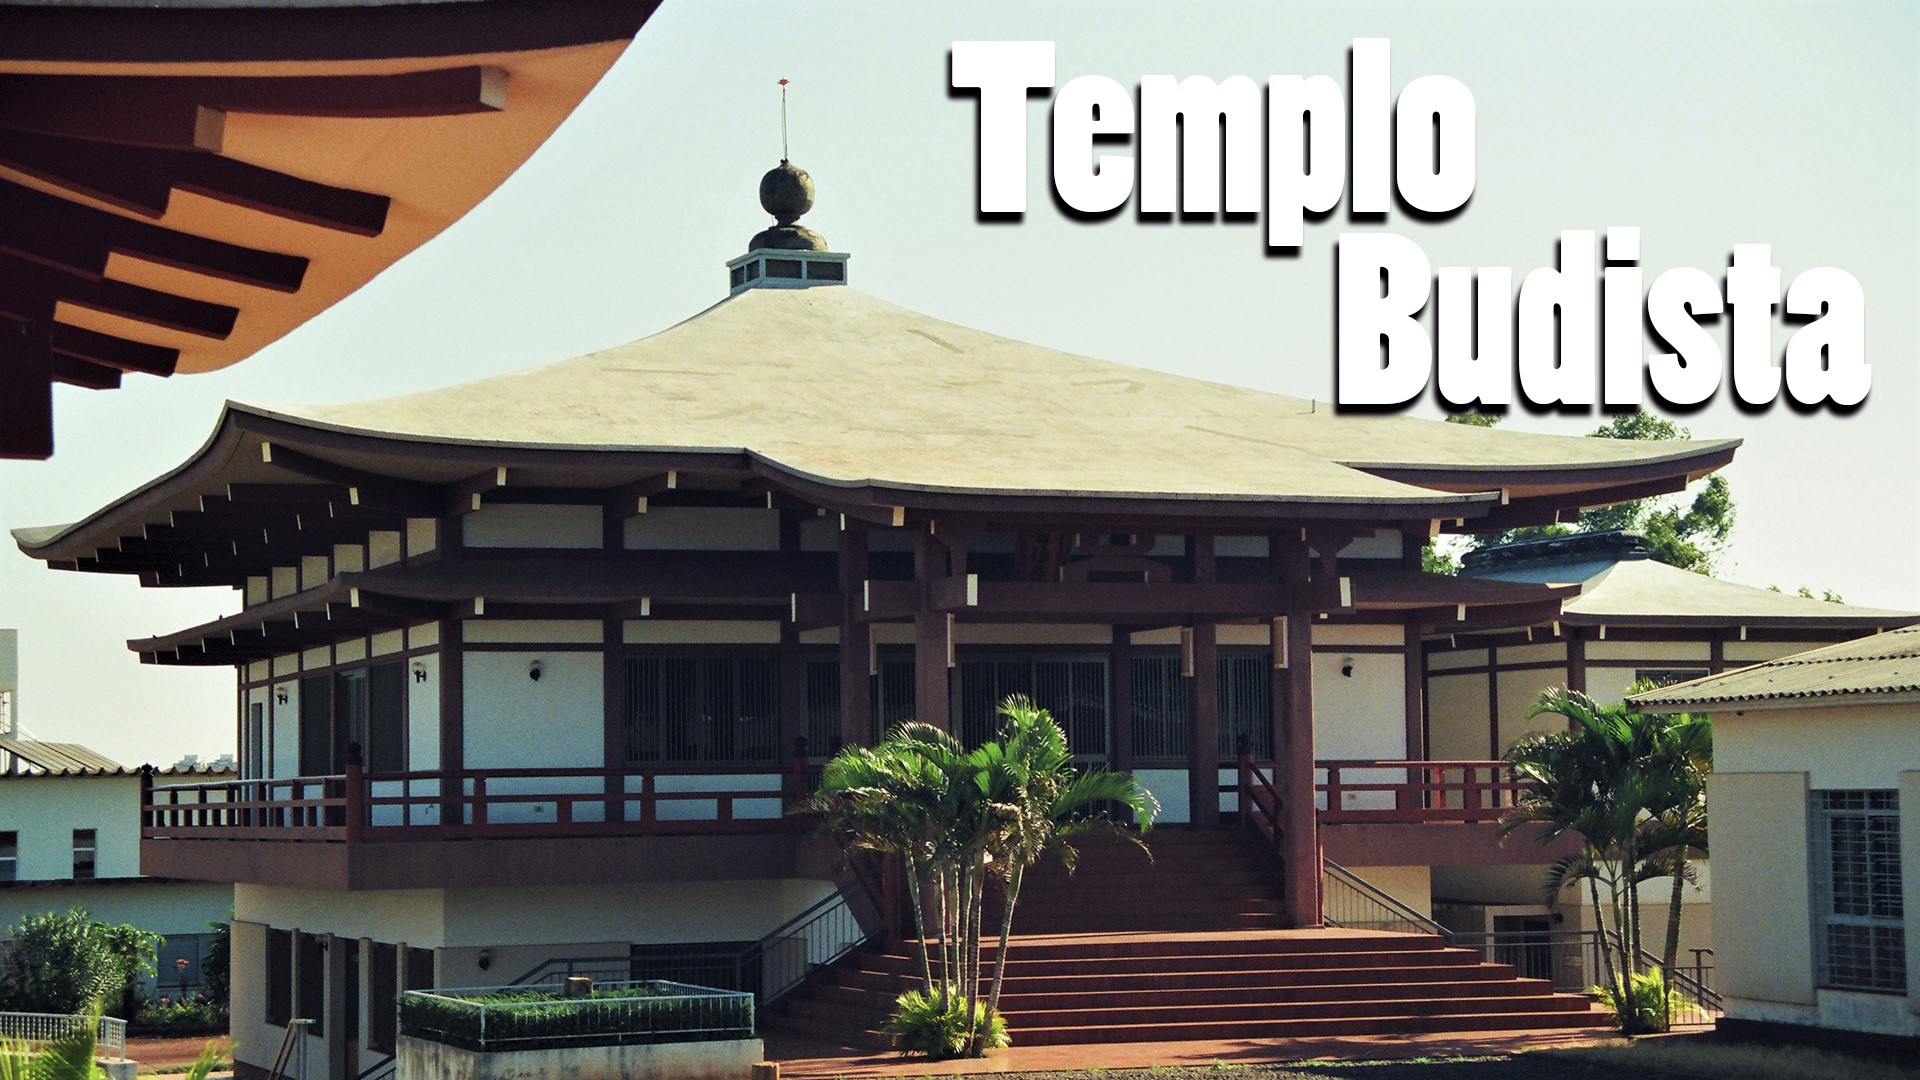 Templo Budista Jodoshu Nippakuji